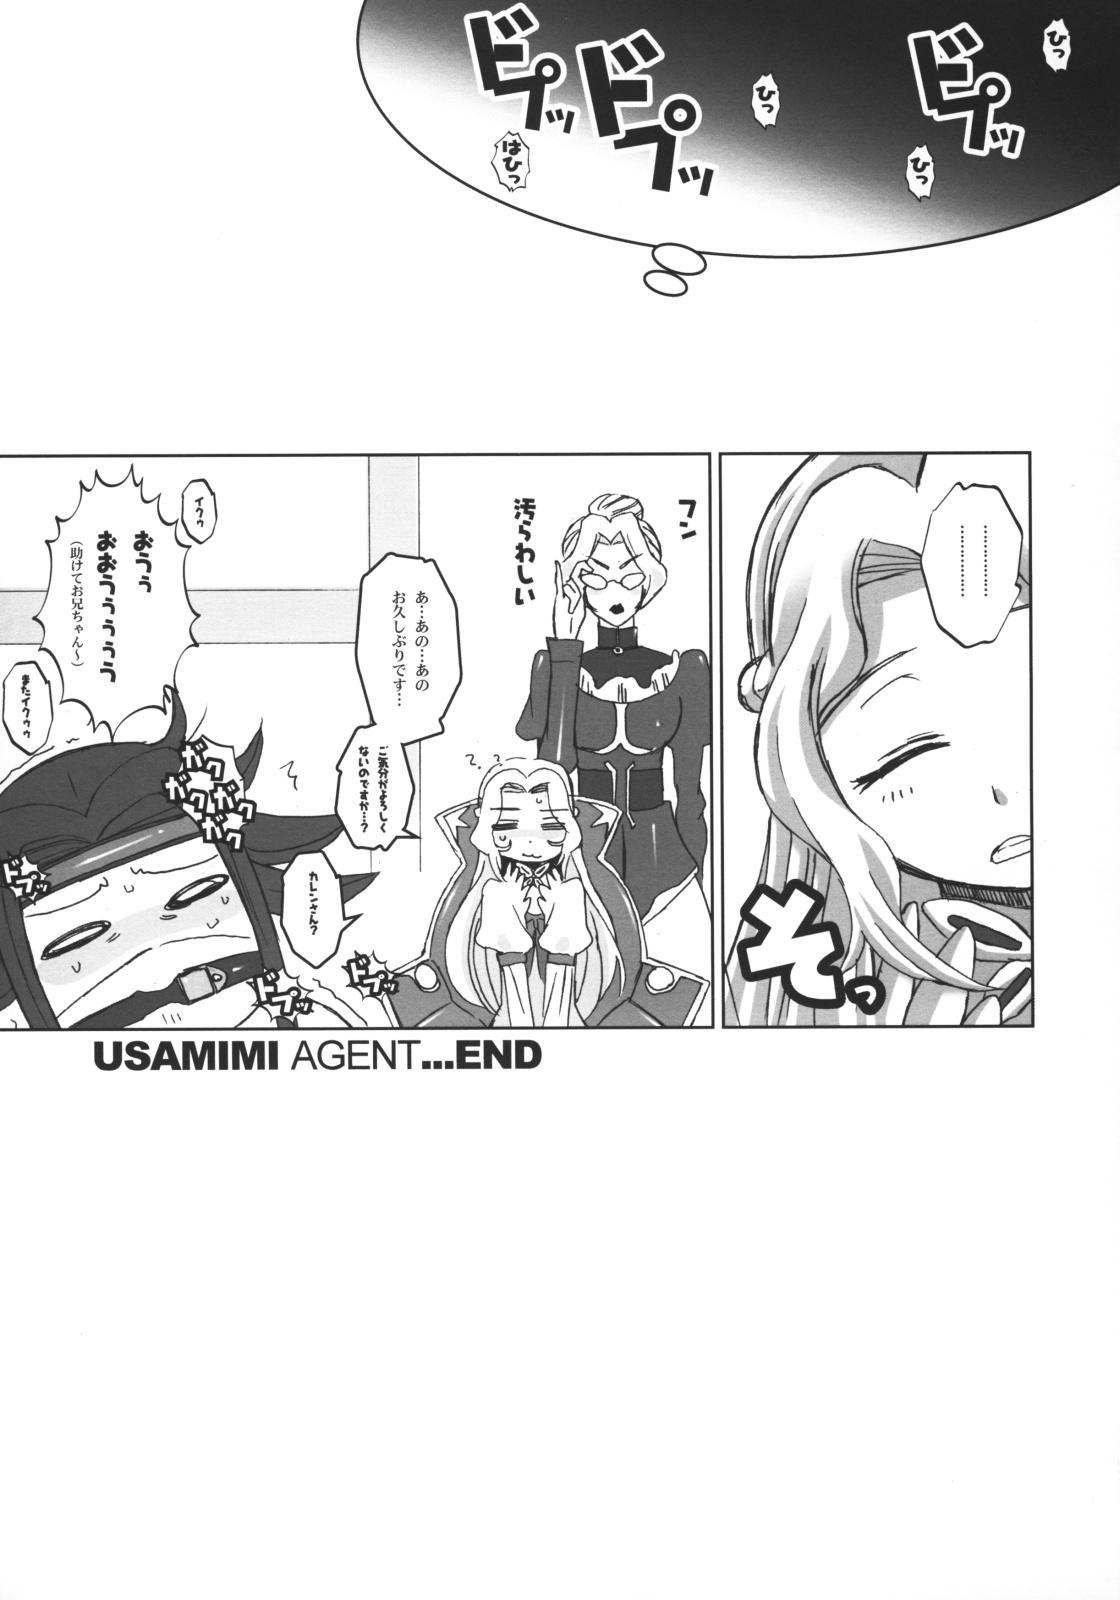 Pleated Gunner #18 - Usamimi Agent 23